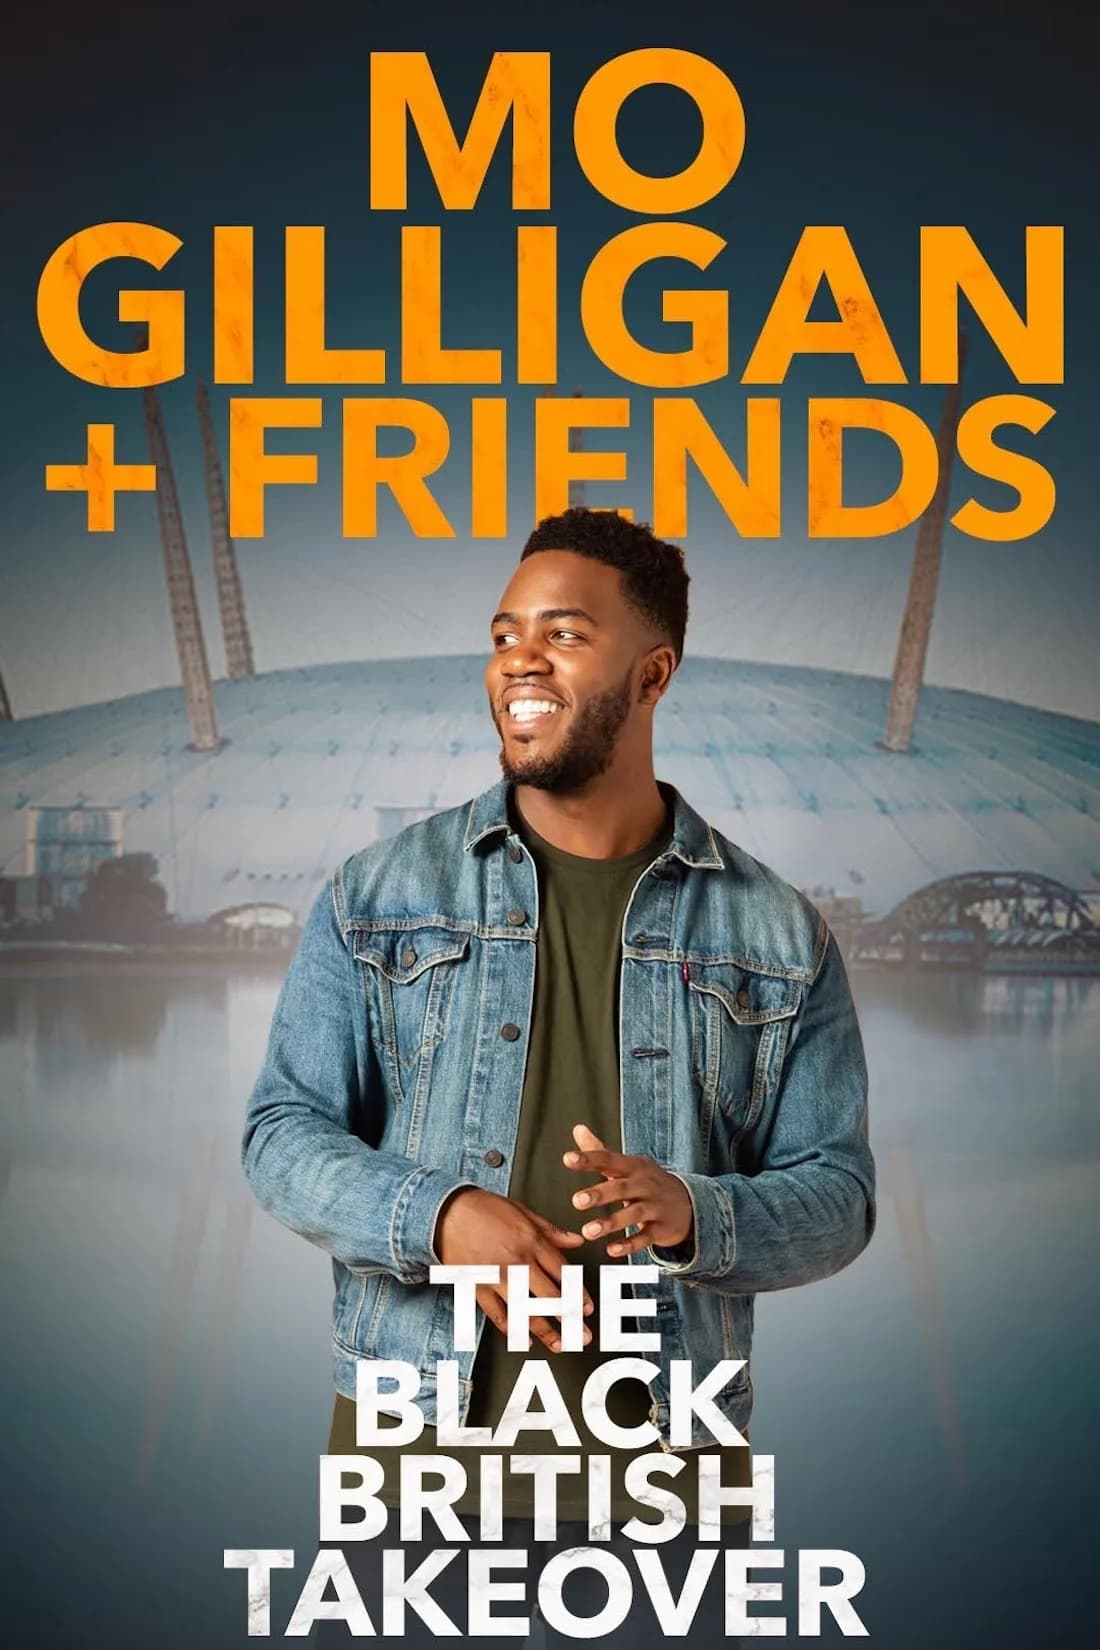 Mo Gilligan & Friends: The Black British Takeover